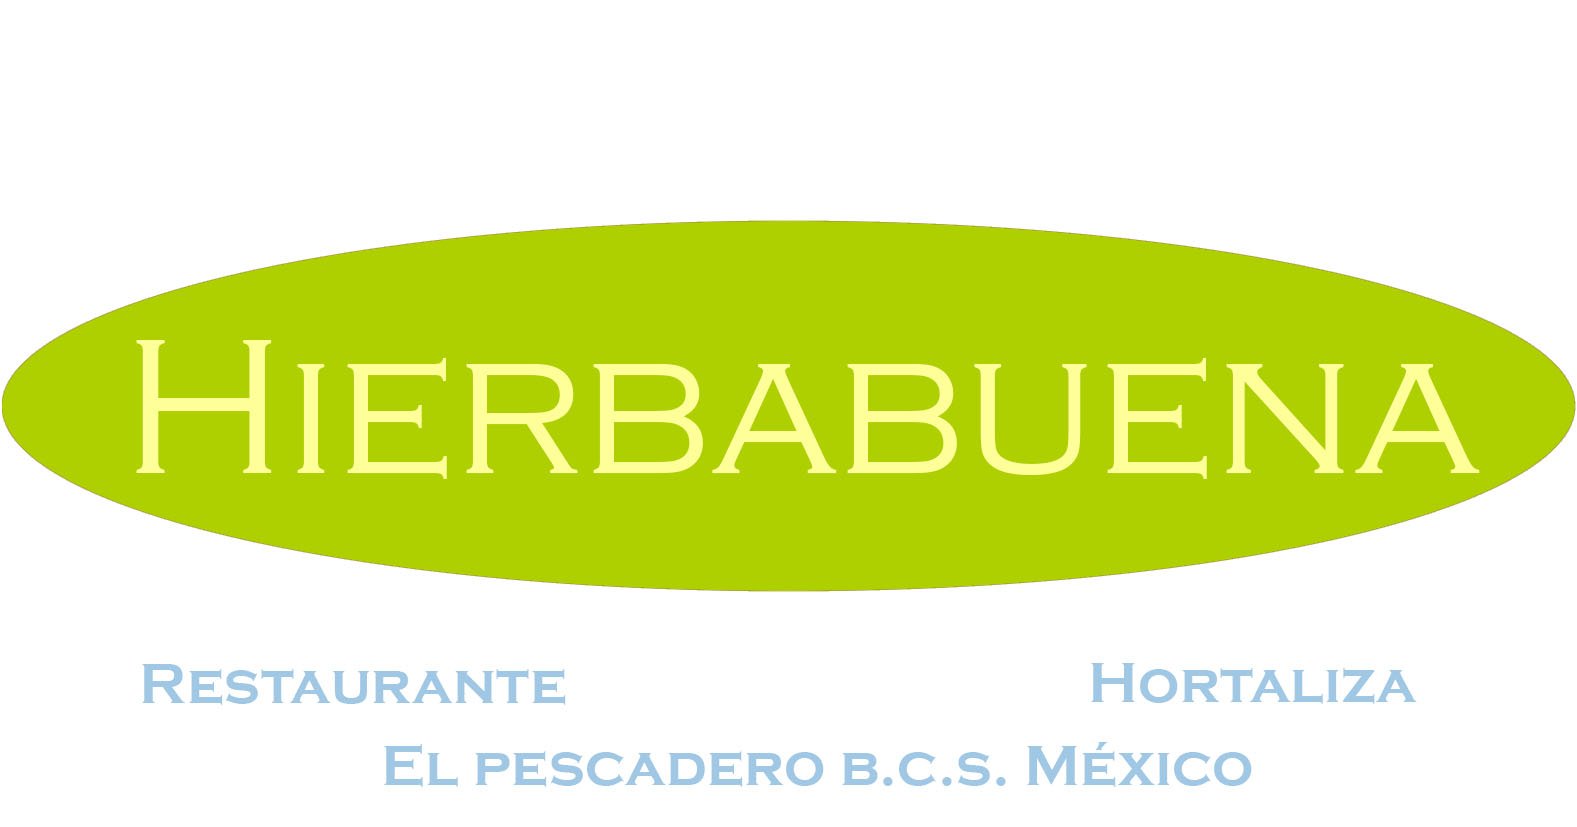 Hierbabuena Sign B (1).jpg